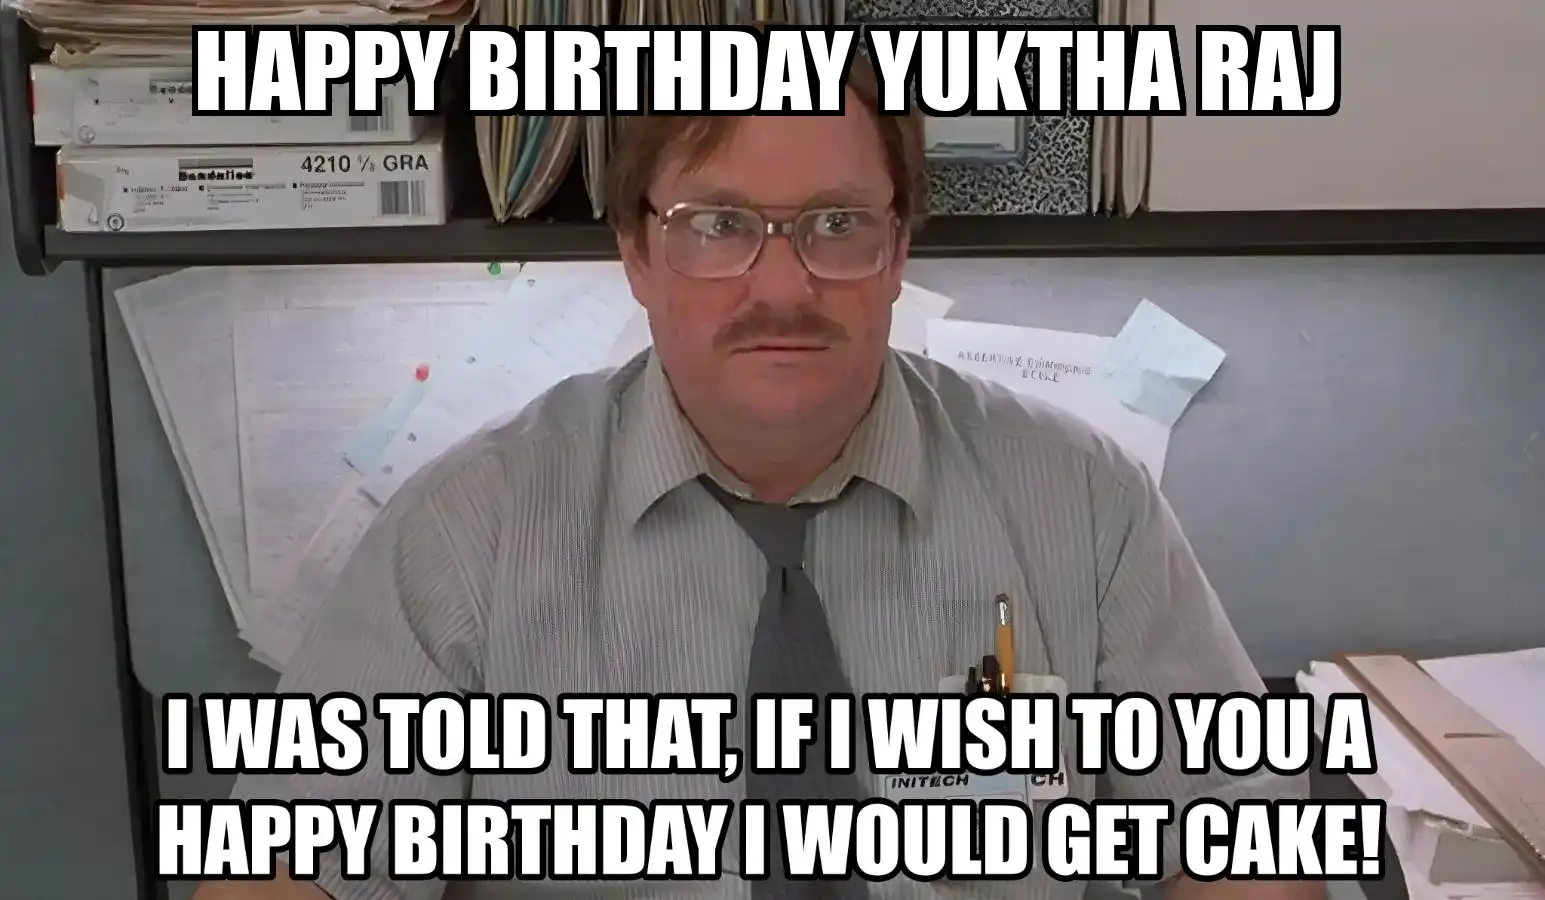 Happy Birthday Yuktha raj I Would Get A Cake Meme